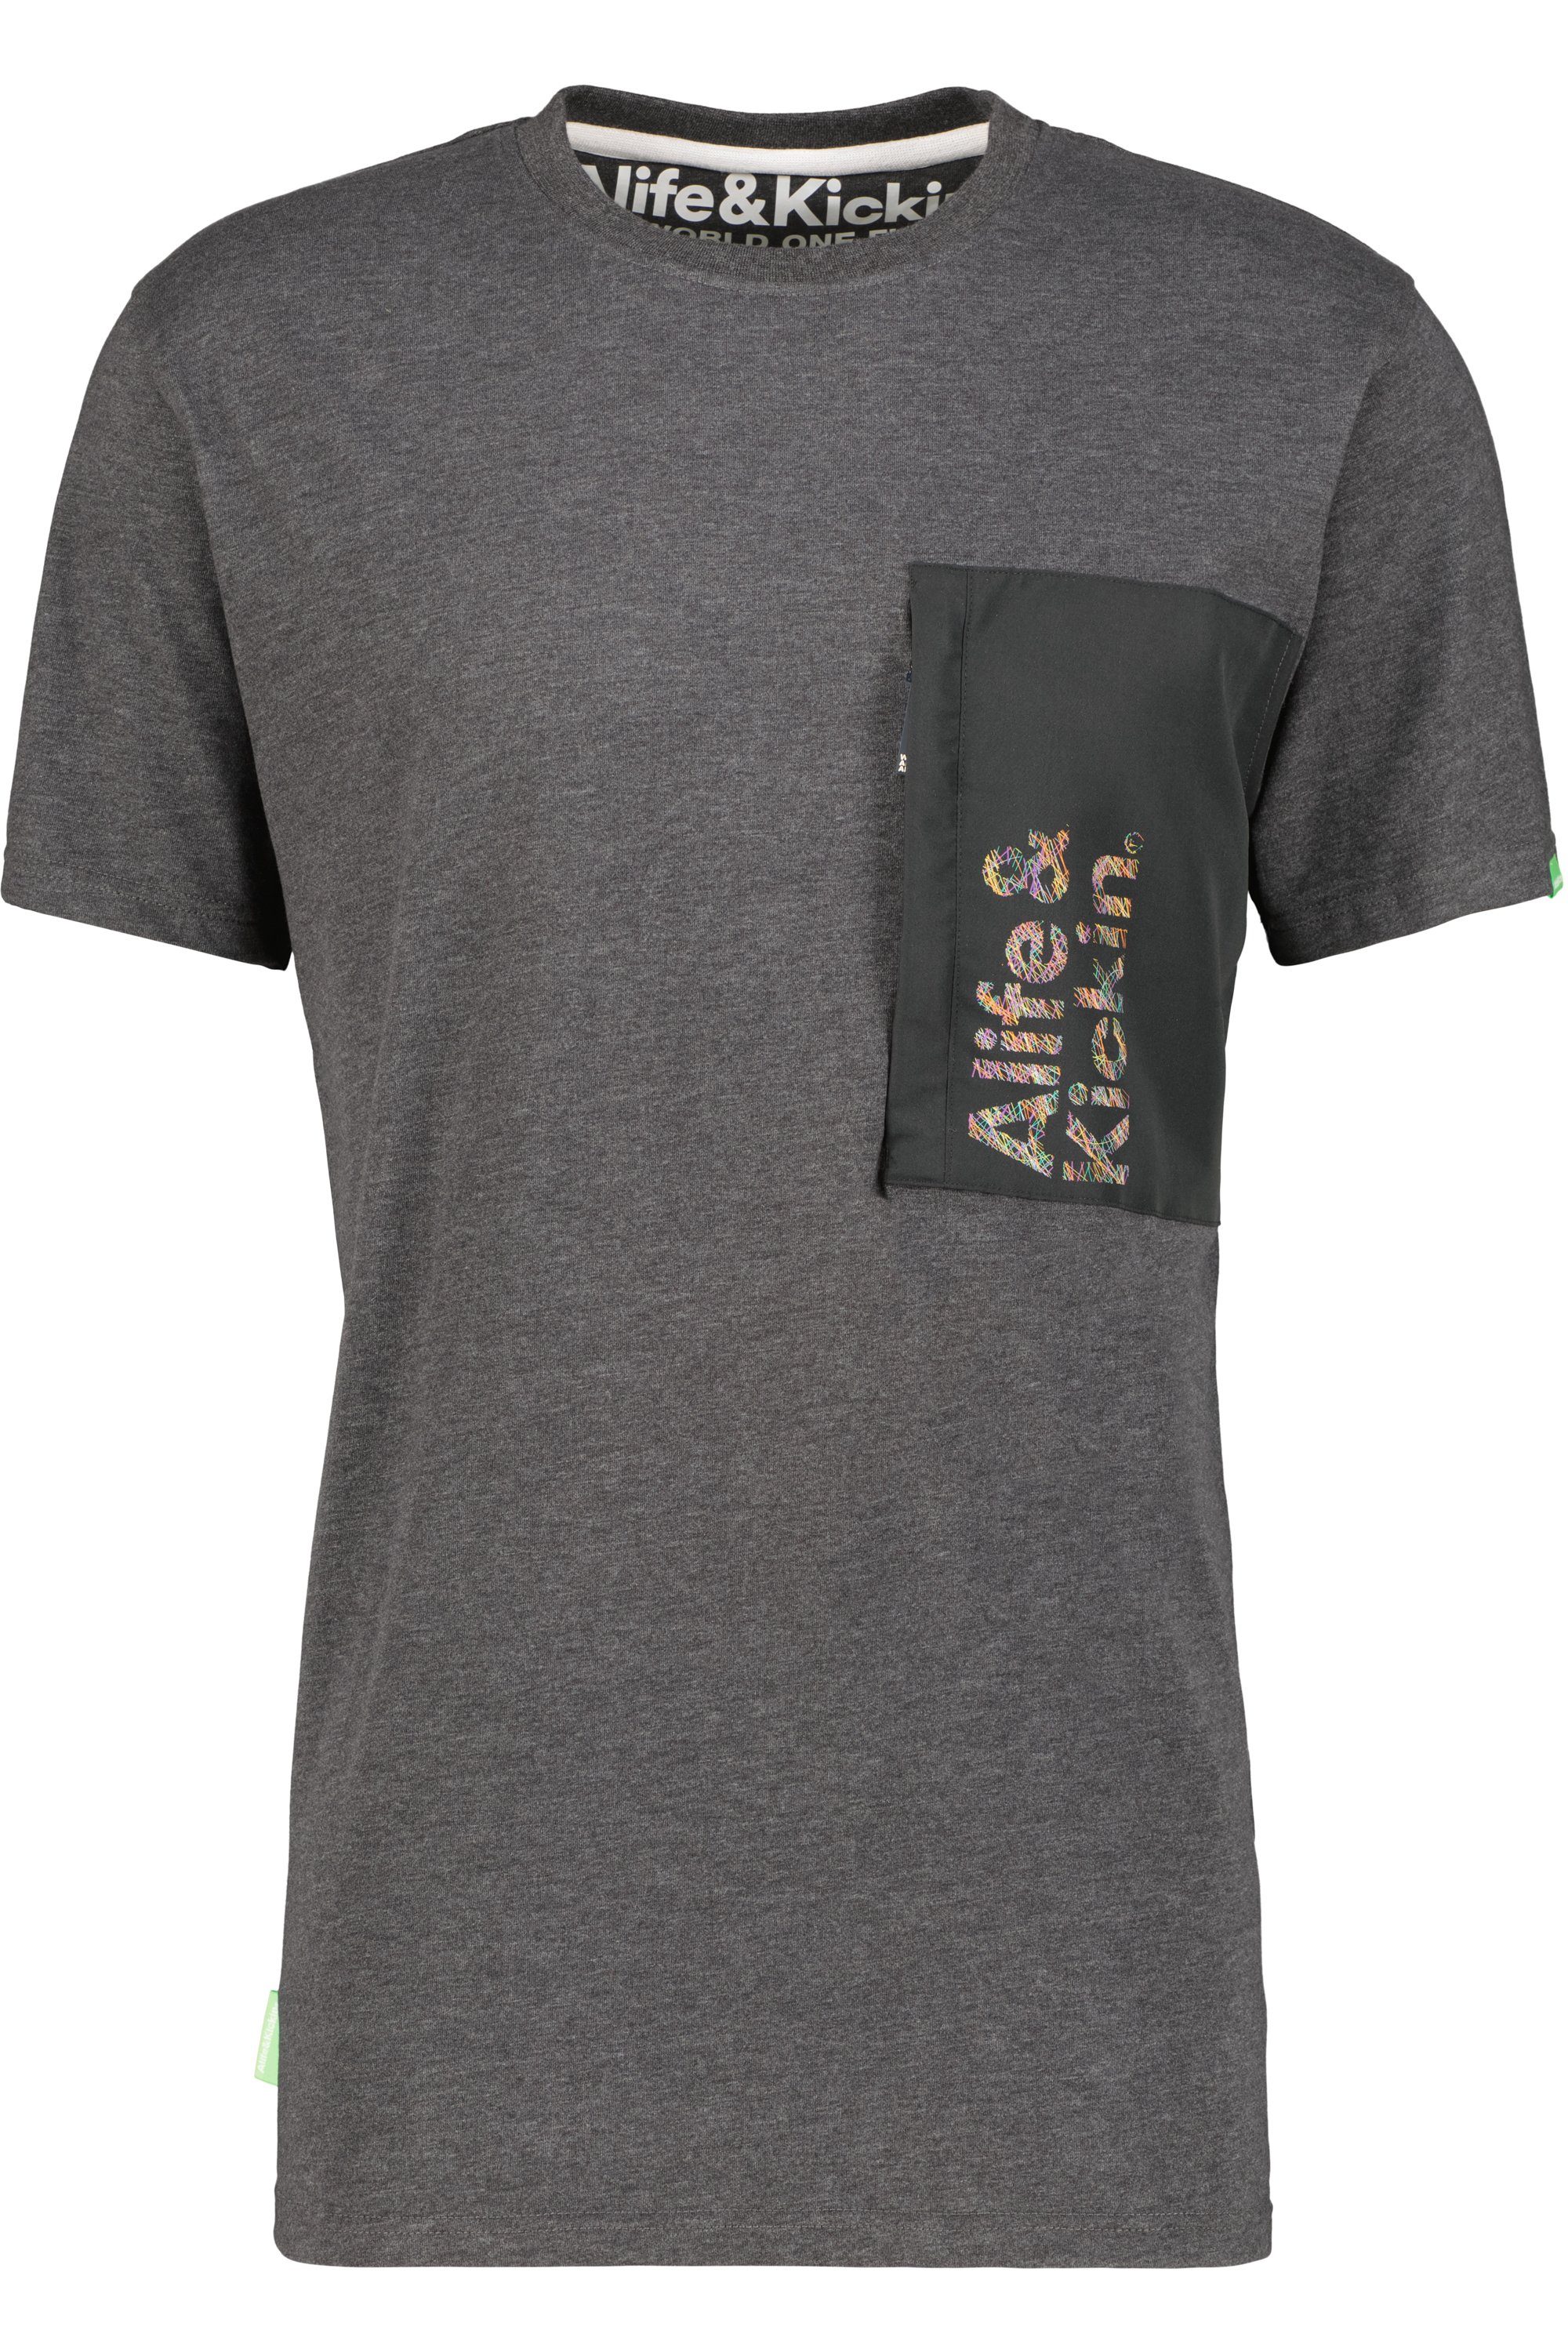 T-Shirt & Alife RossAK Shirt T-Shirt Kickin moonless Herren